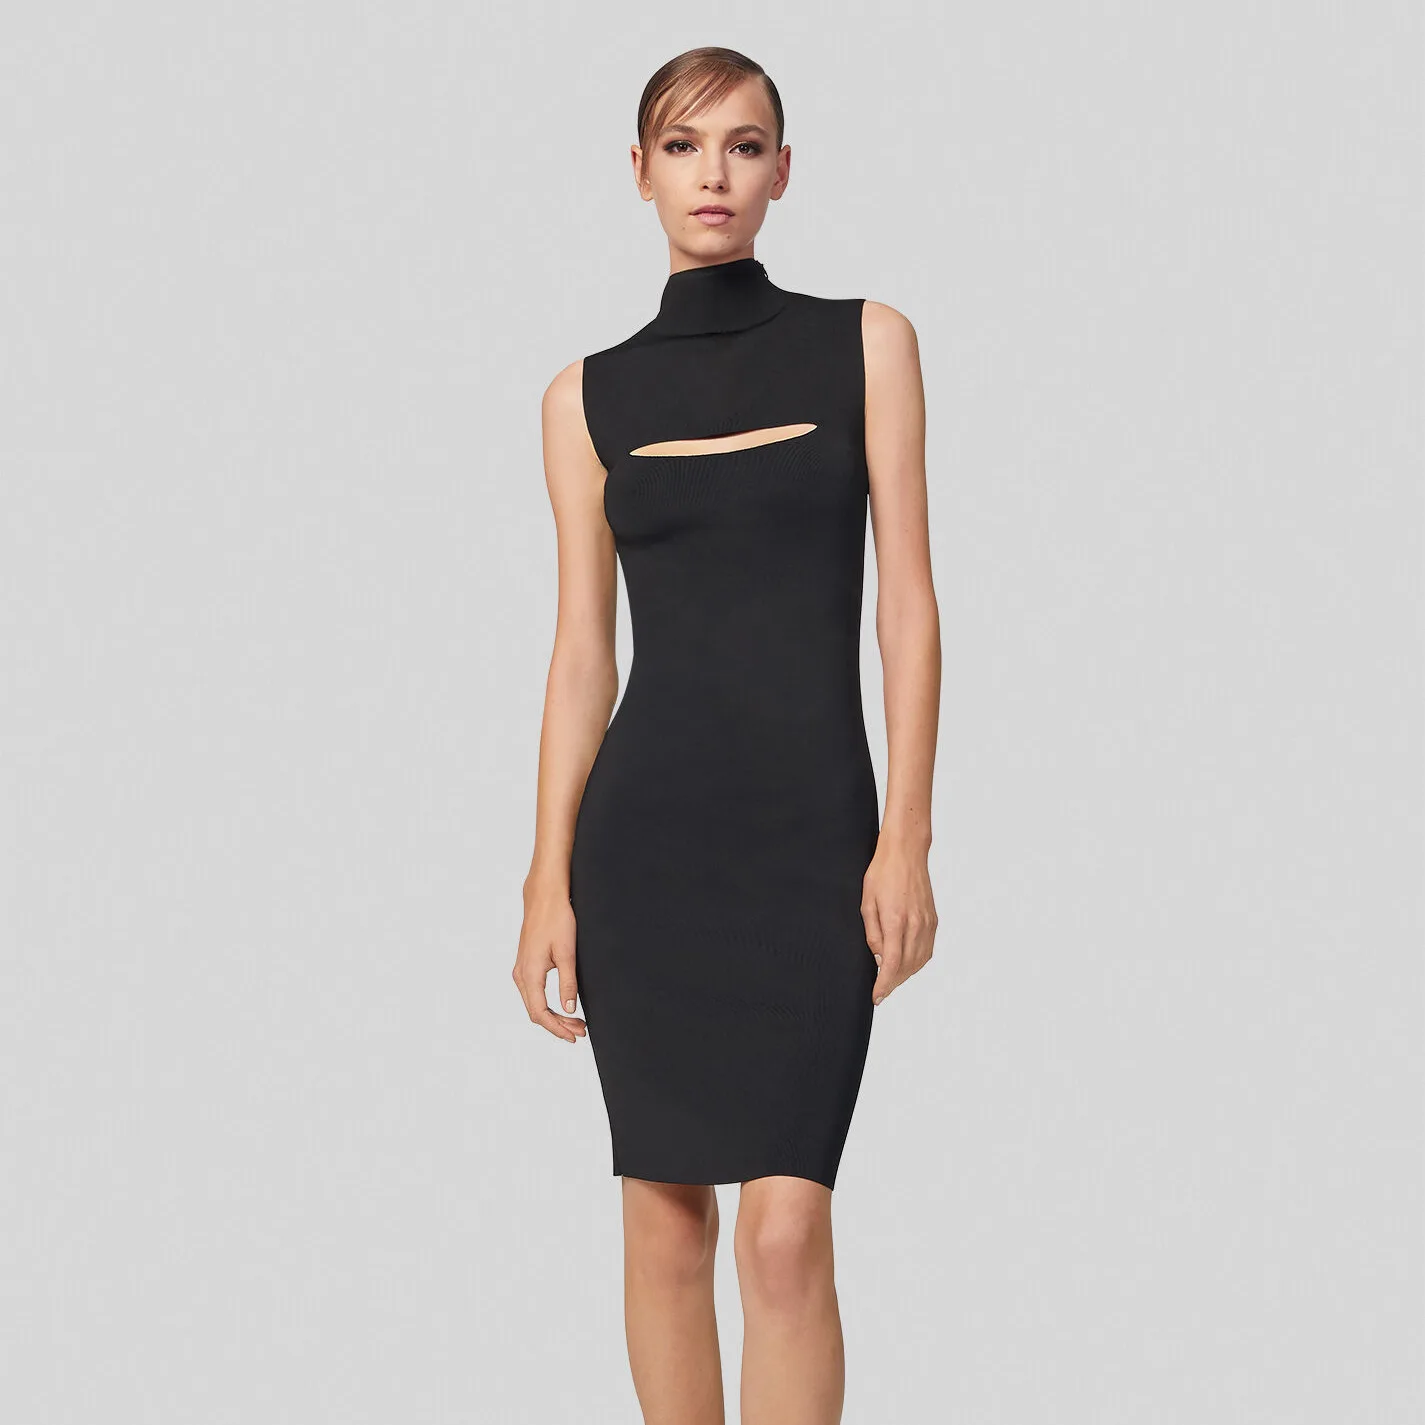 2022 Spring And Summer Women's New Fashion Sense Of Design Sleeveless Slim Hollow Black Dress